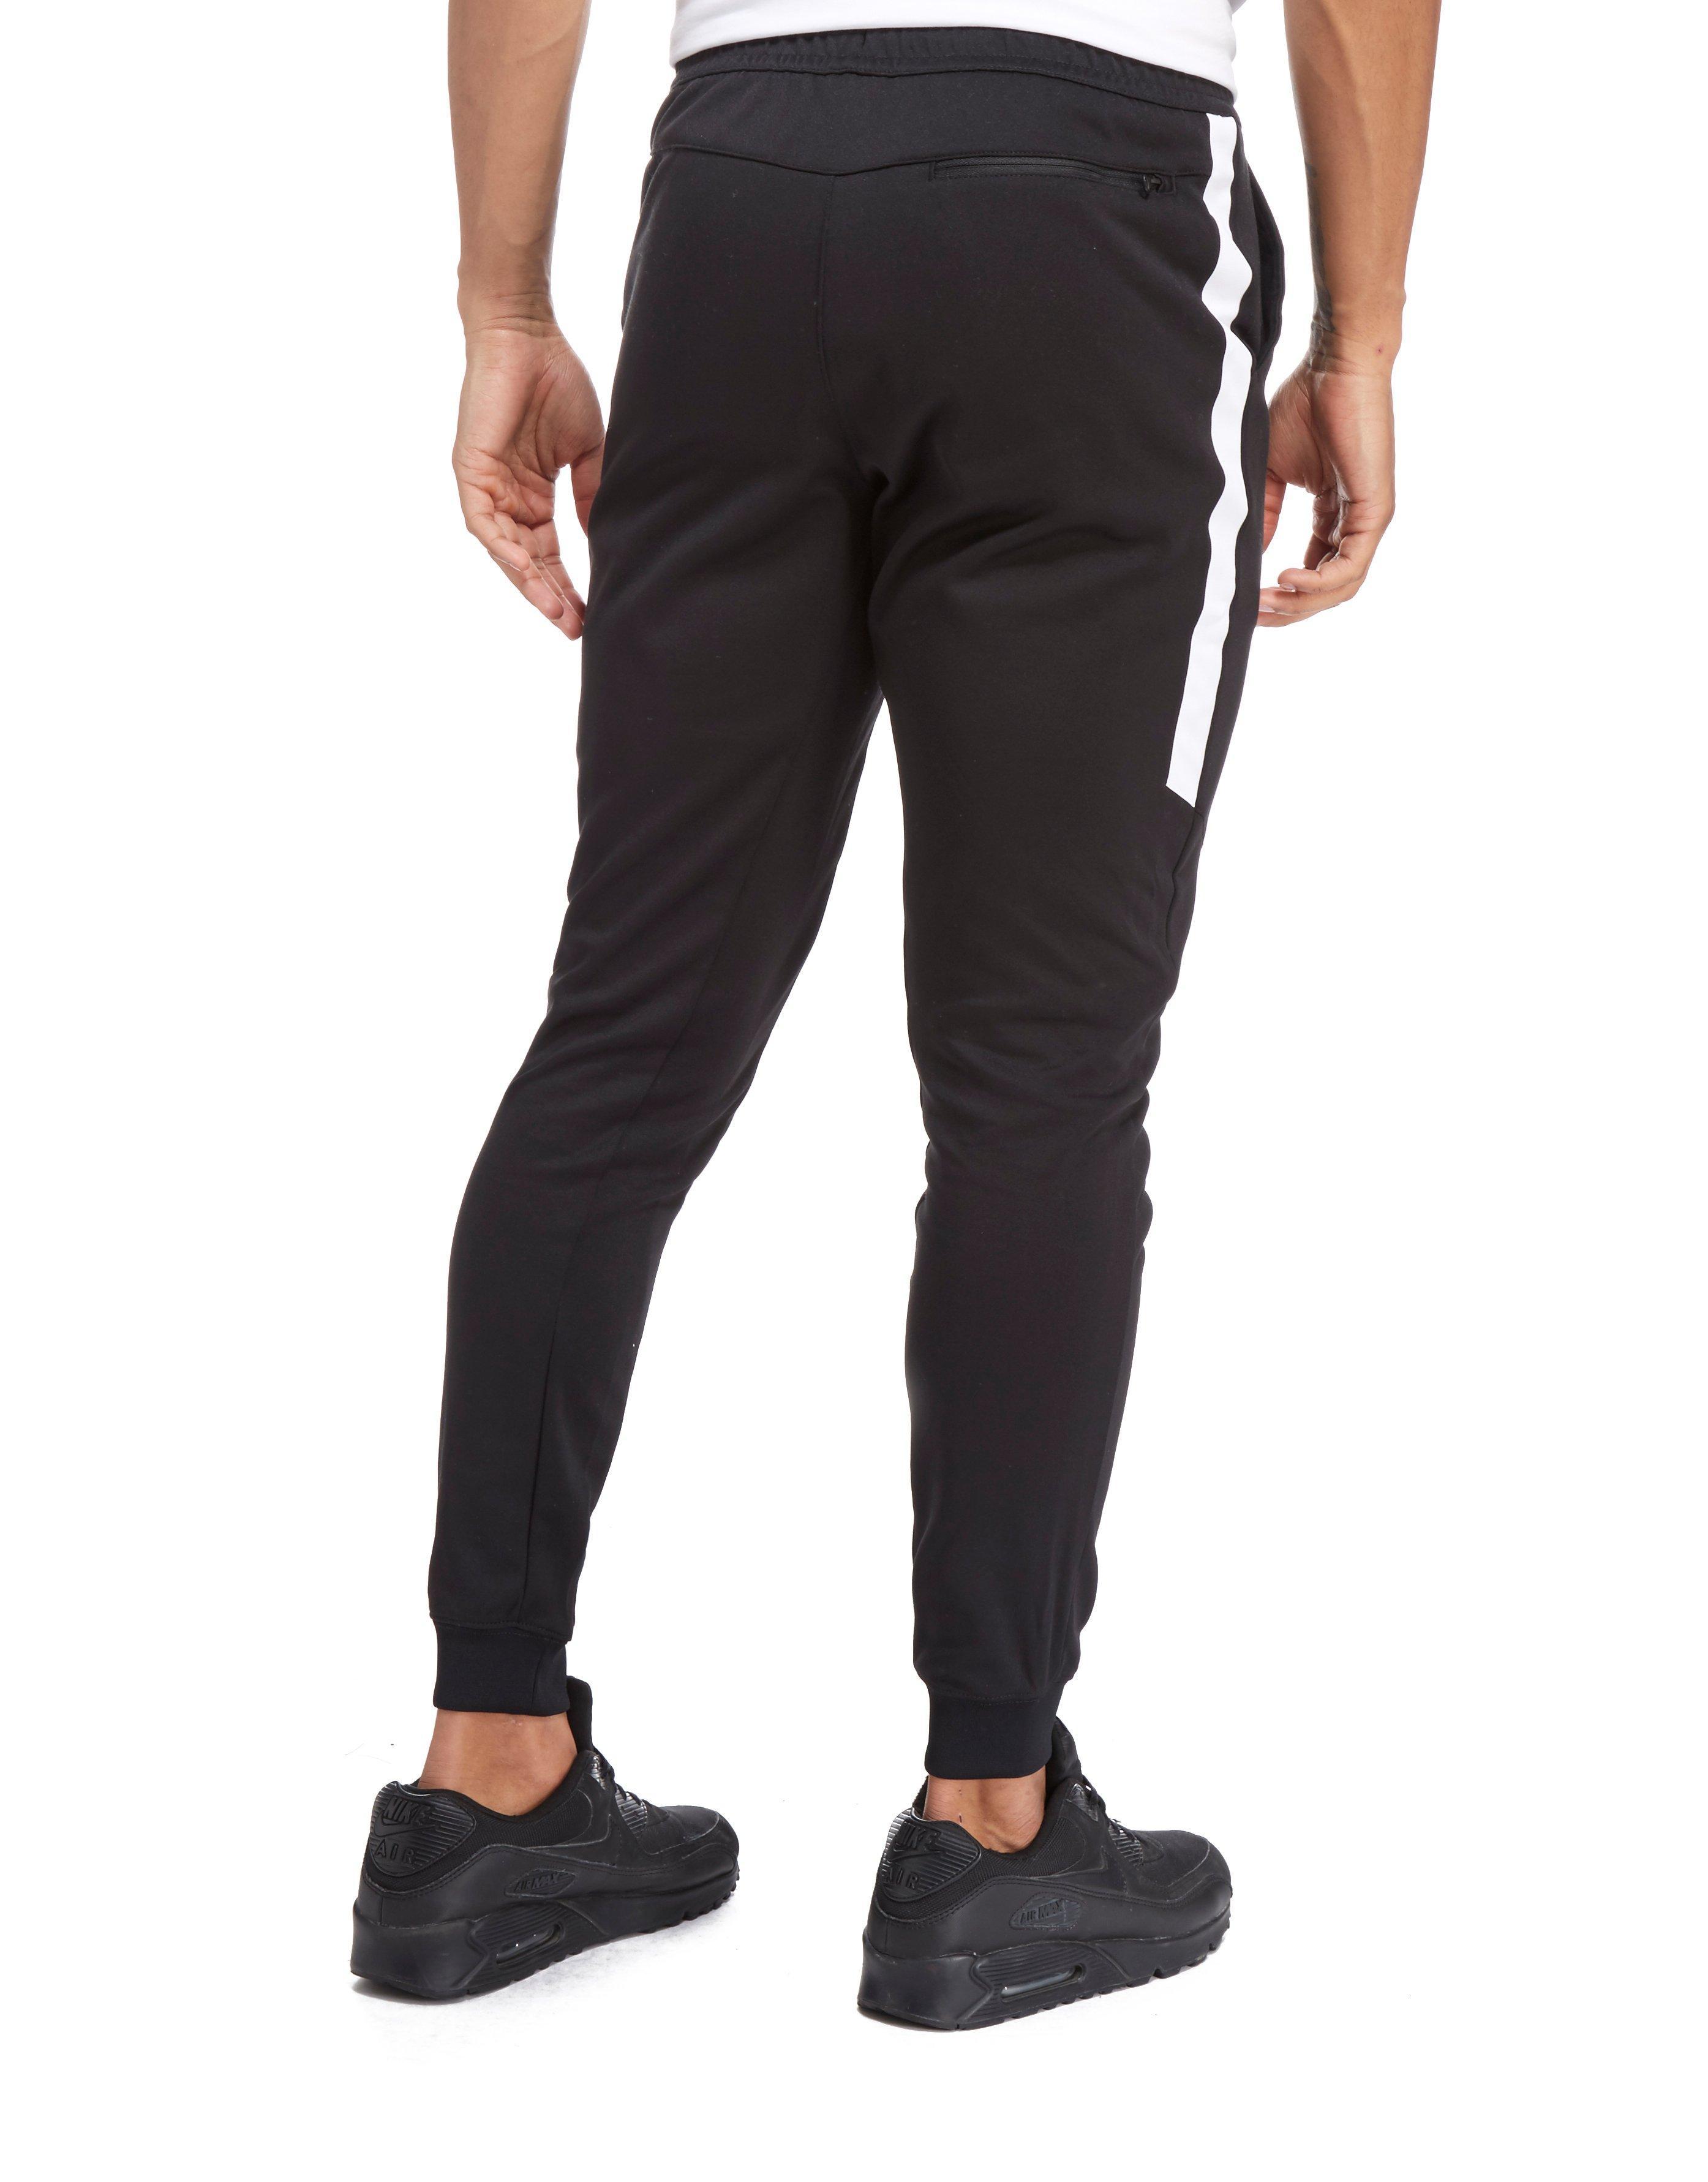 Nike Tribute Dc Pants in Black for Men - Lyst